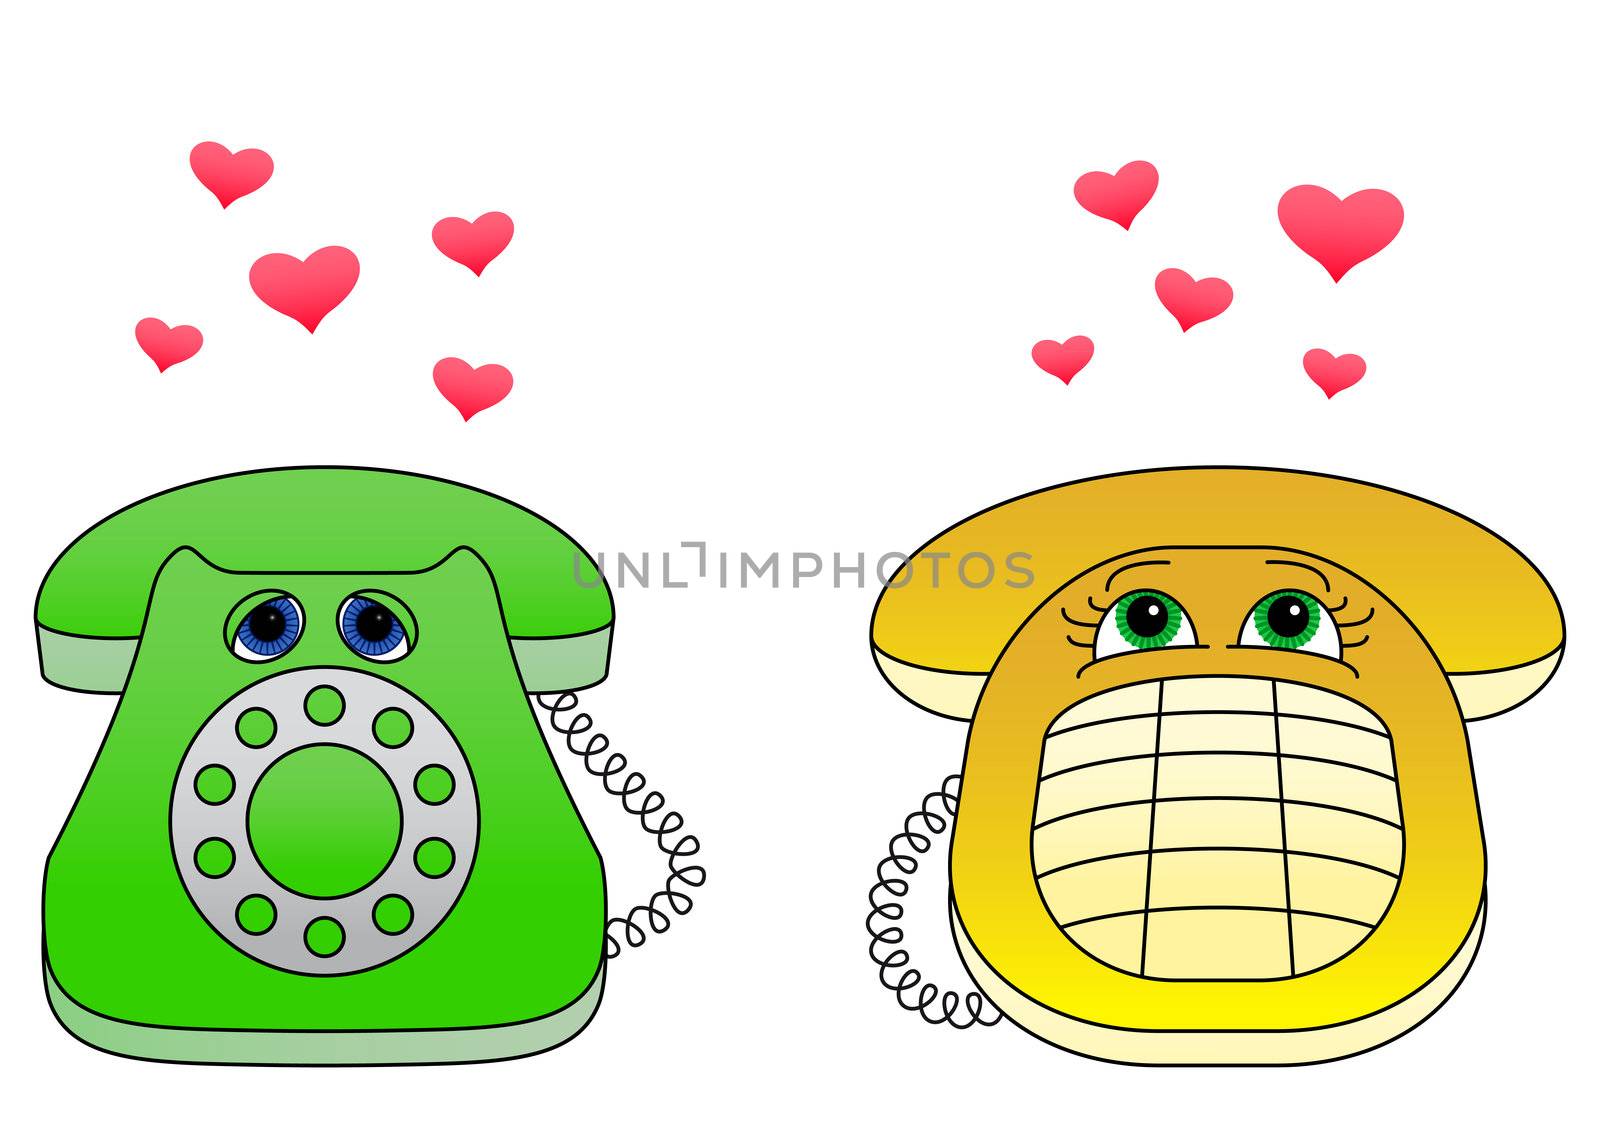 Valentines cartoon: desktop phones, enamoured each other, communicate calls.